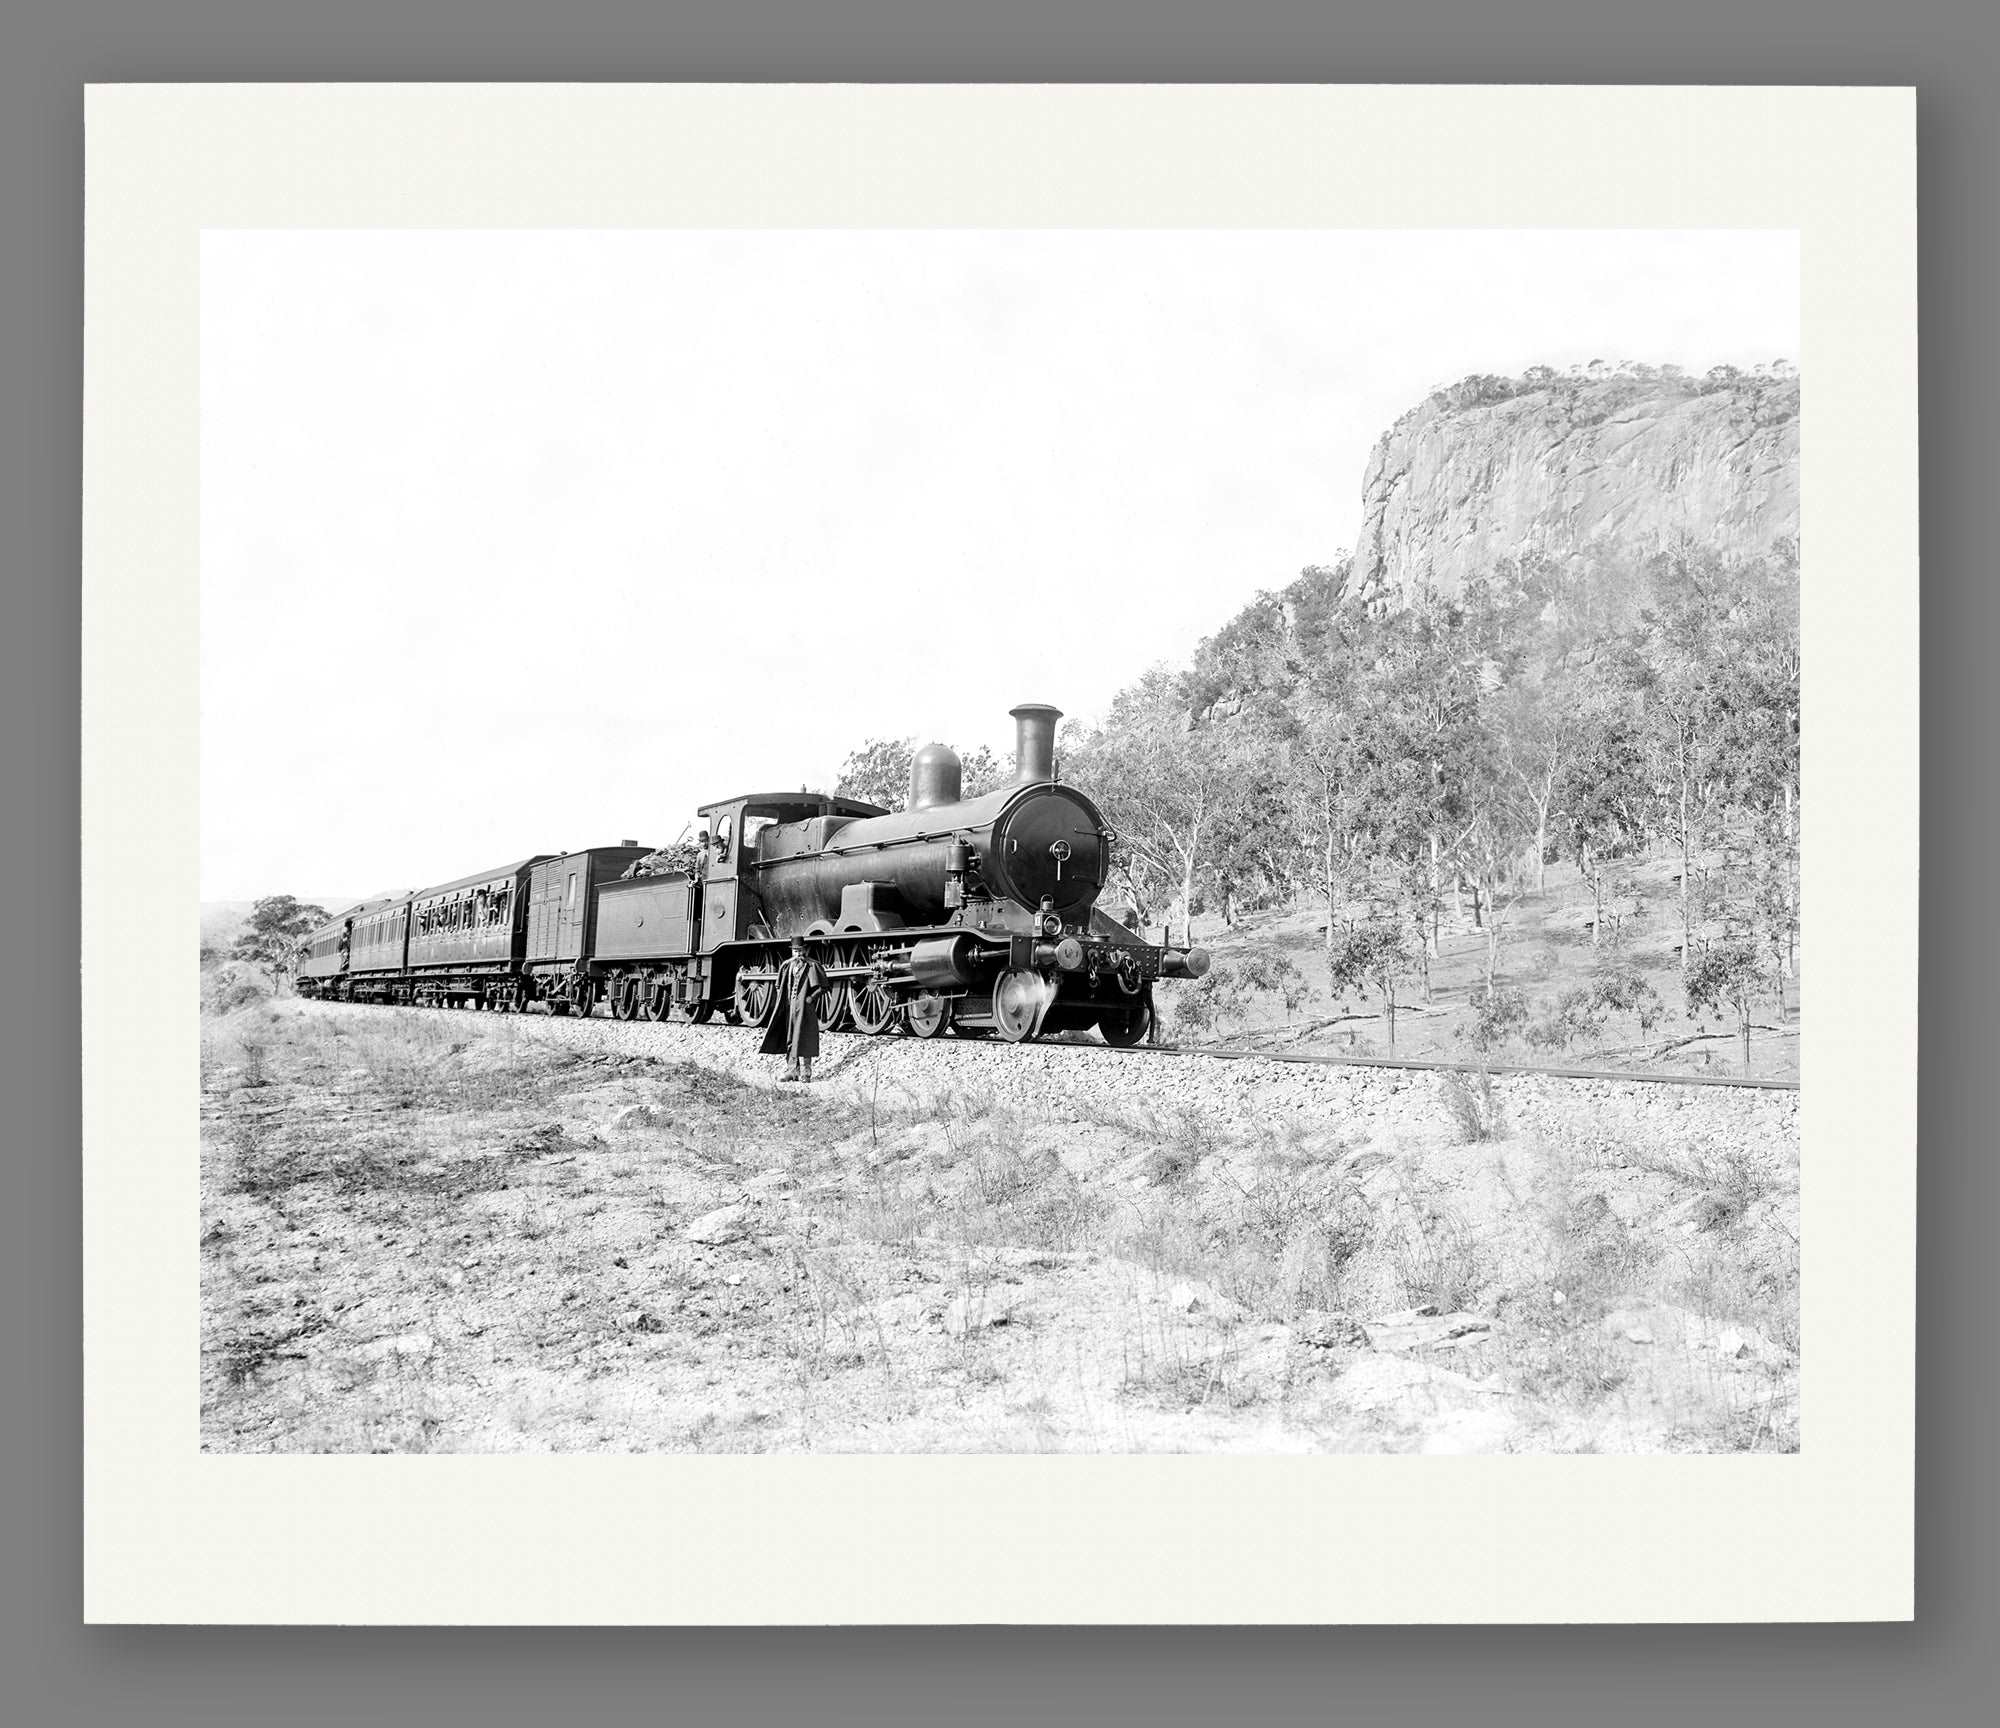 A fine art paper print of a vintage photograph of a passenger train